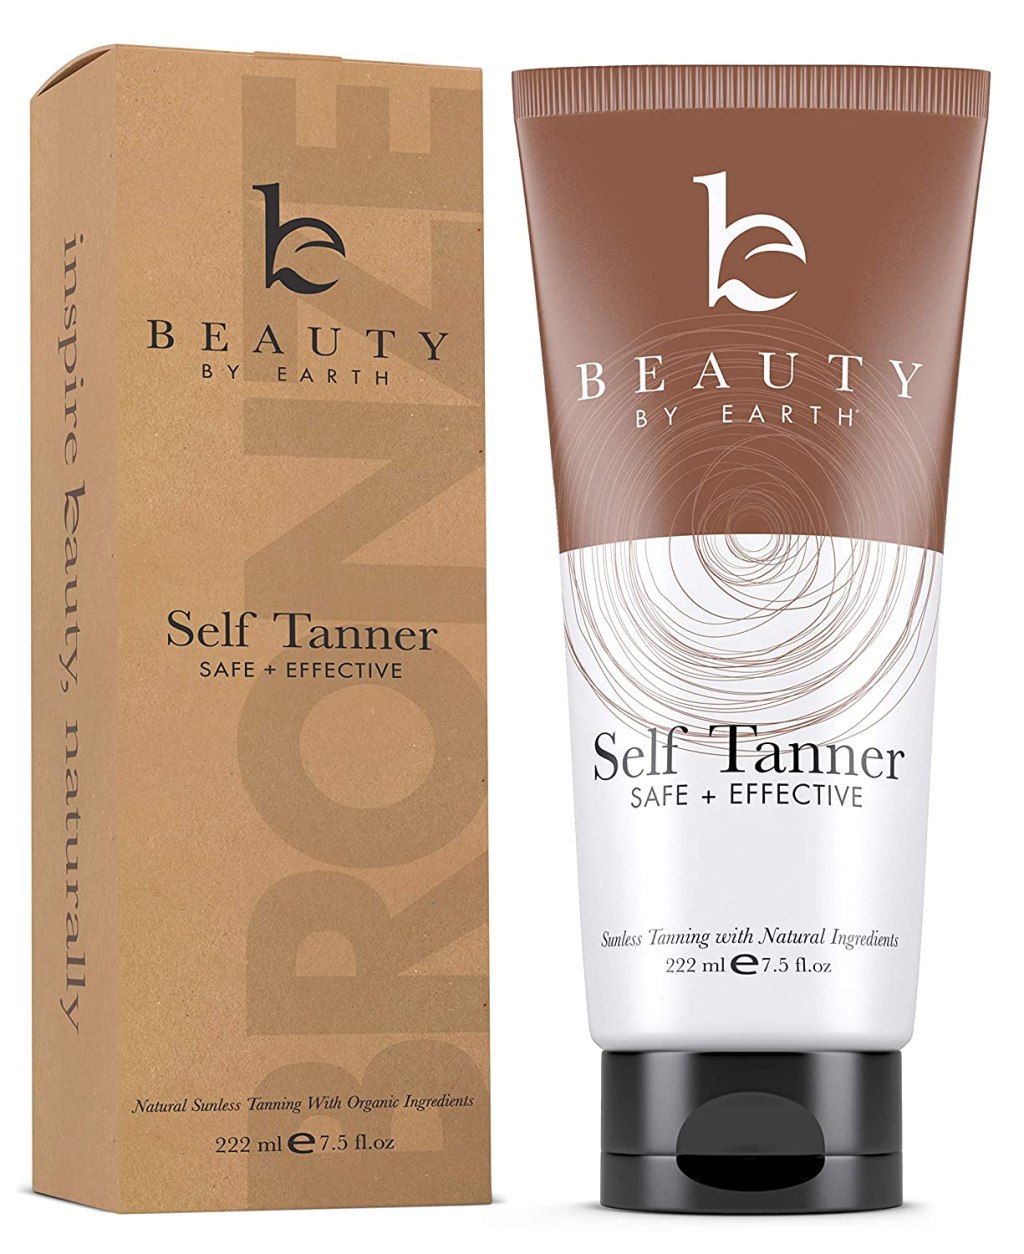 B Beauty self tanner